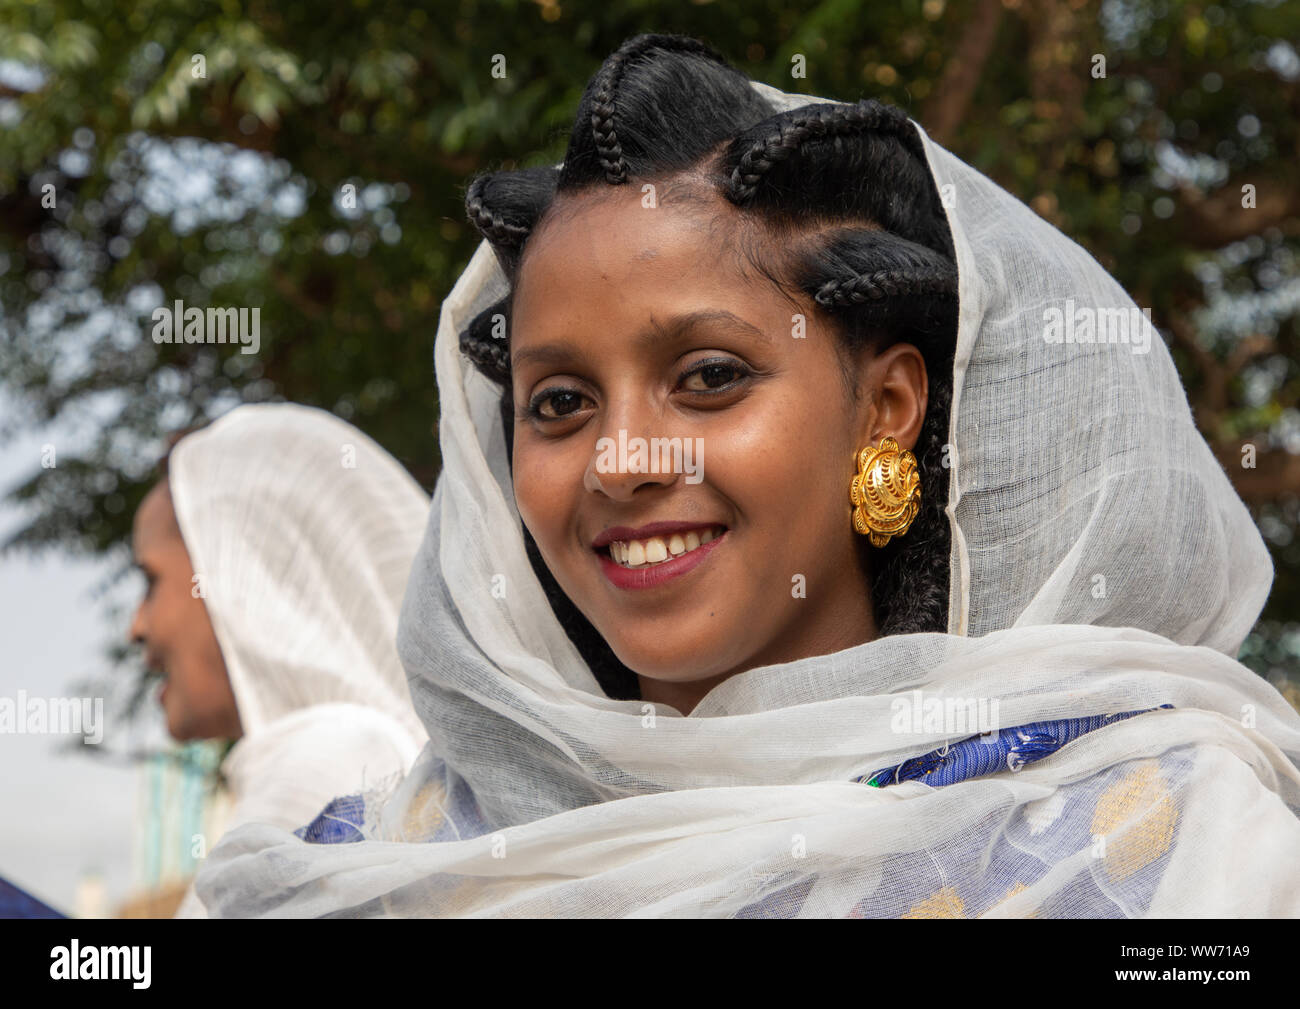 eritrean-woman-with-traditionbal-hairstyle-central-region-asmara-eritrea-WW71A9.jpg